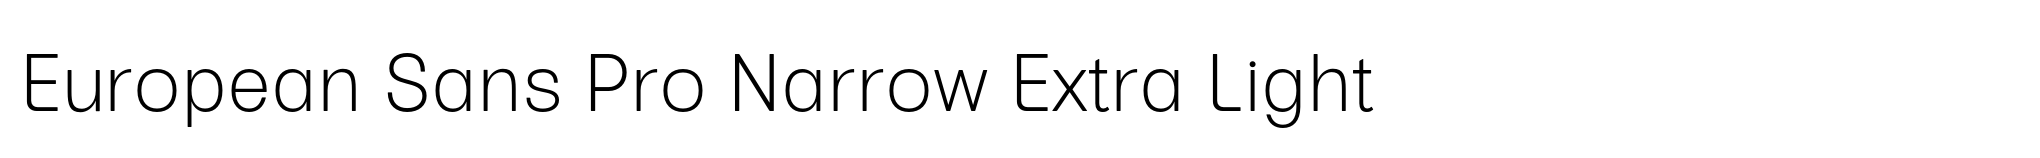 European Sans Pro Narrow Extra Light image